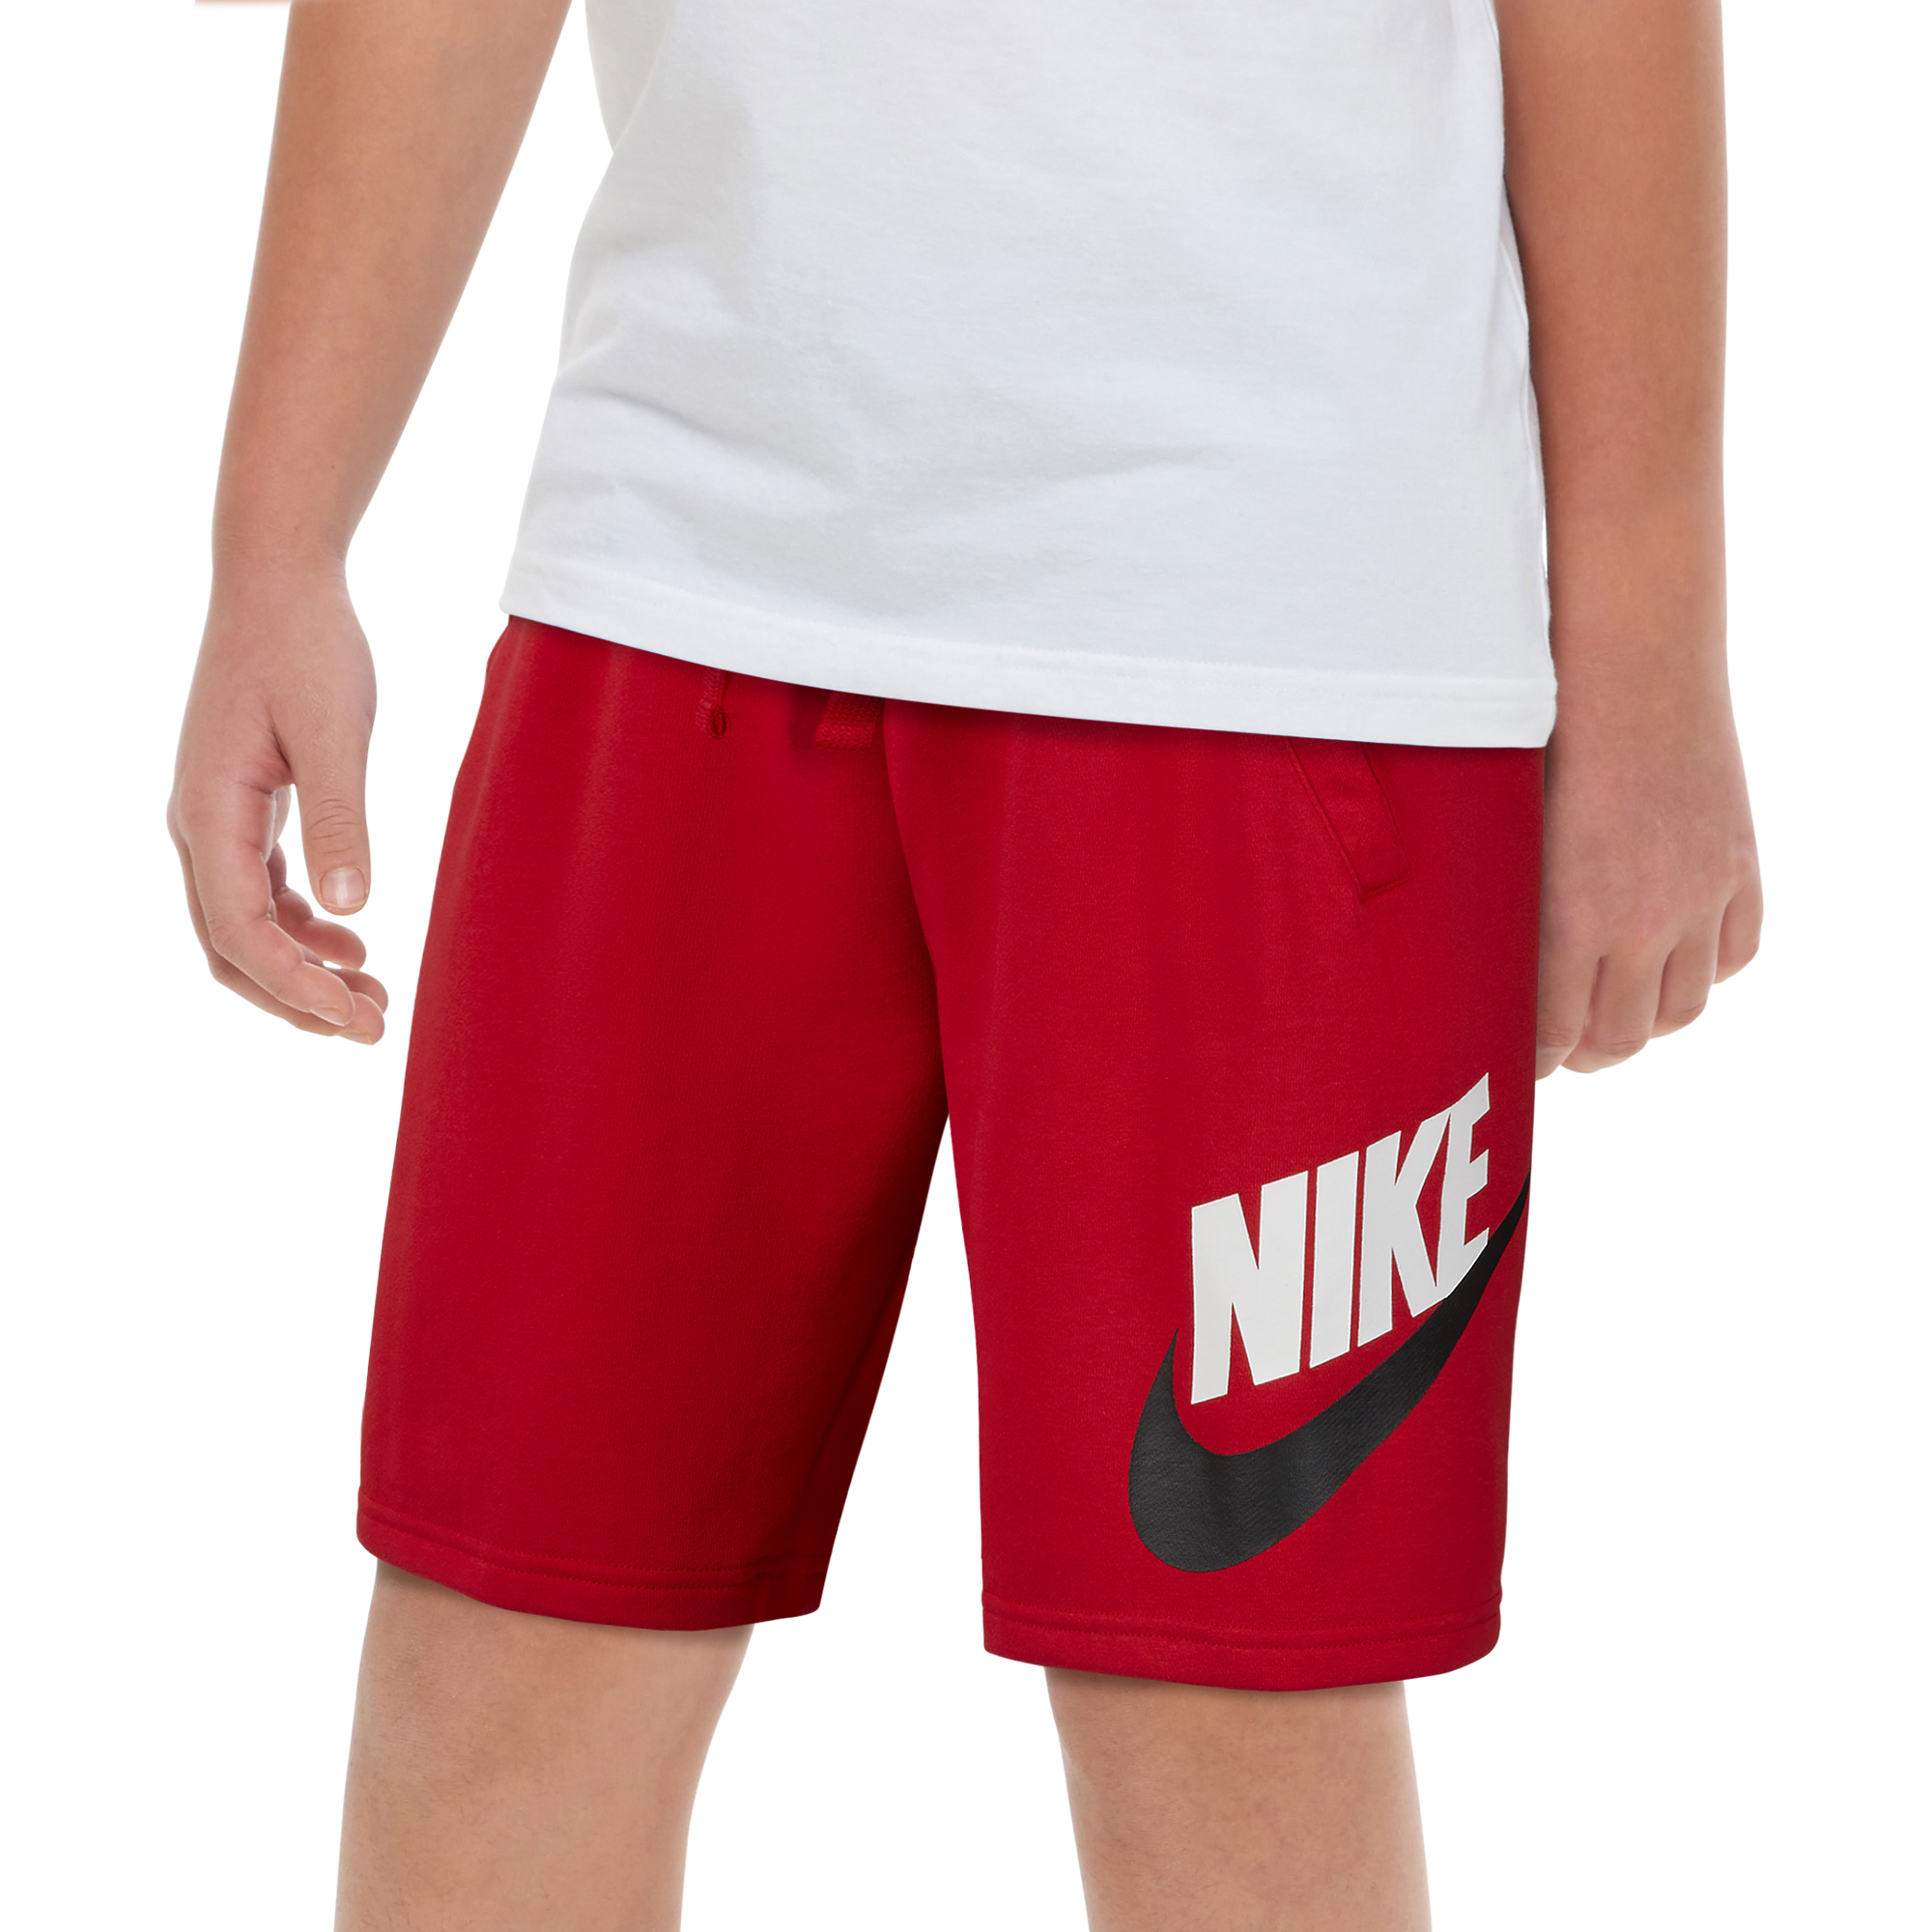 Шорты Nike NSW. Foot Locker шорты. Шорты найк черно красные. Шорты найк чёрно красные.